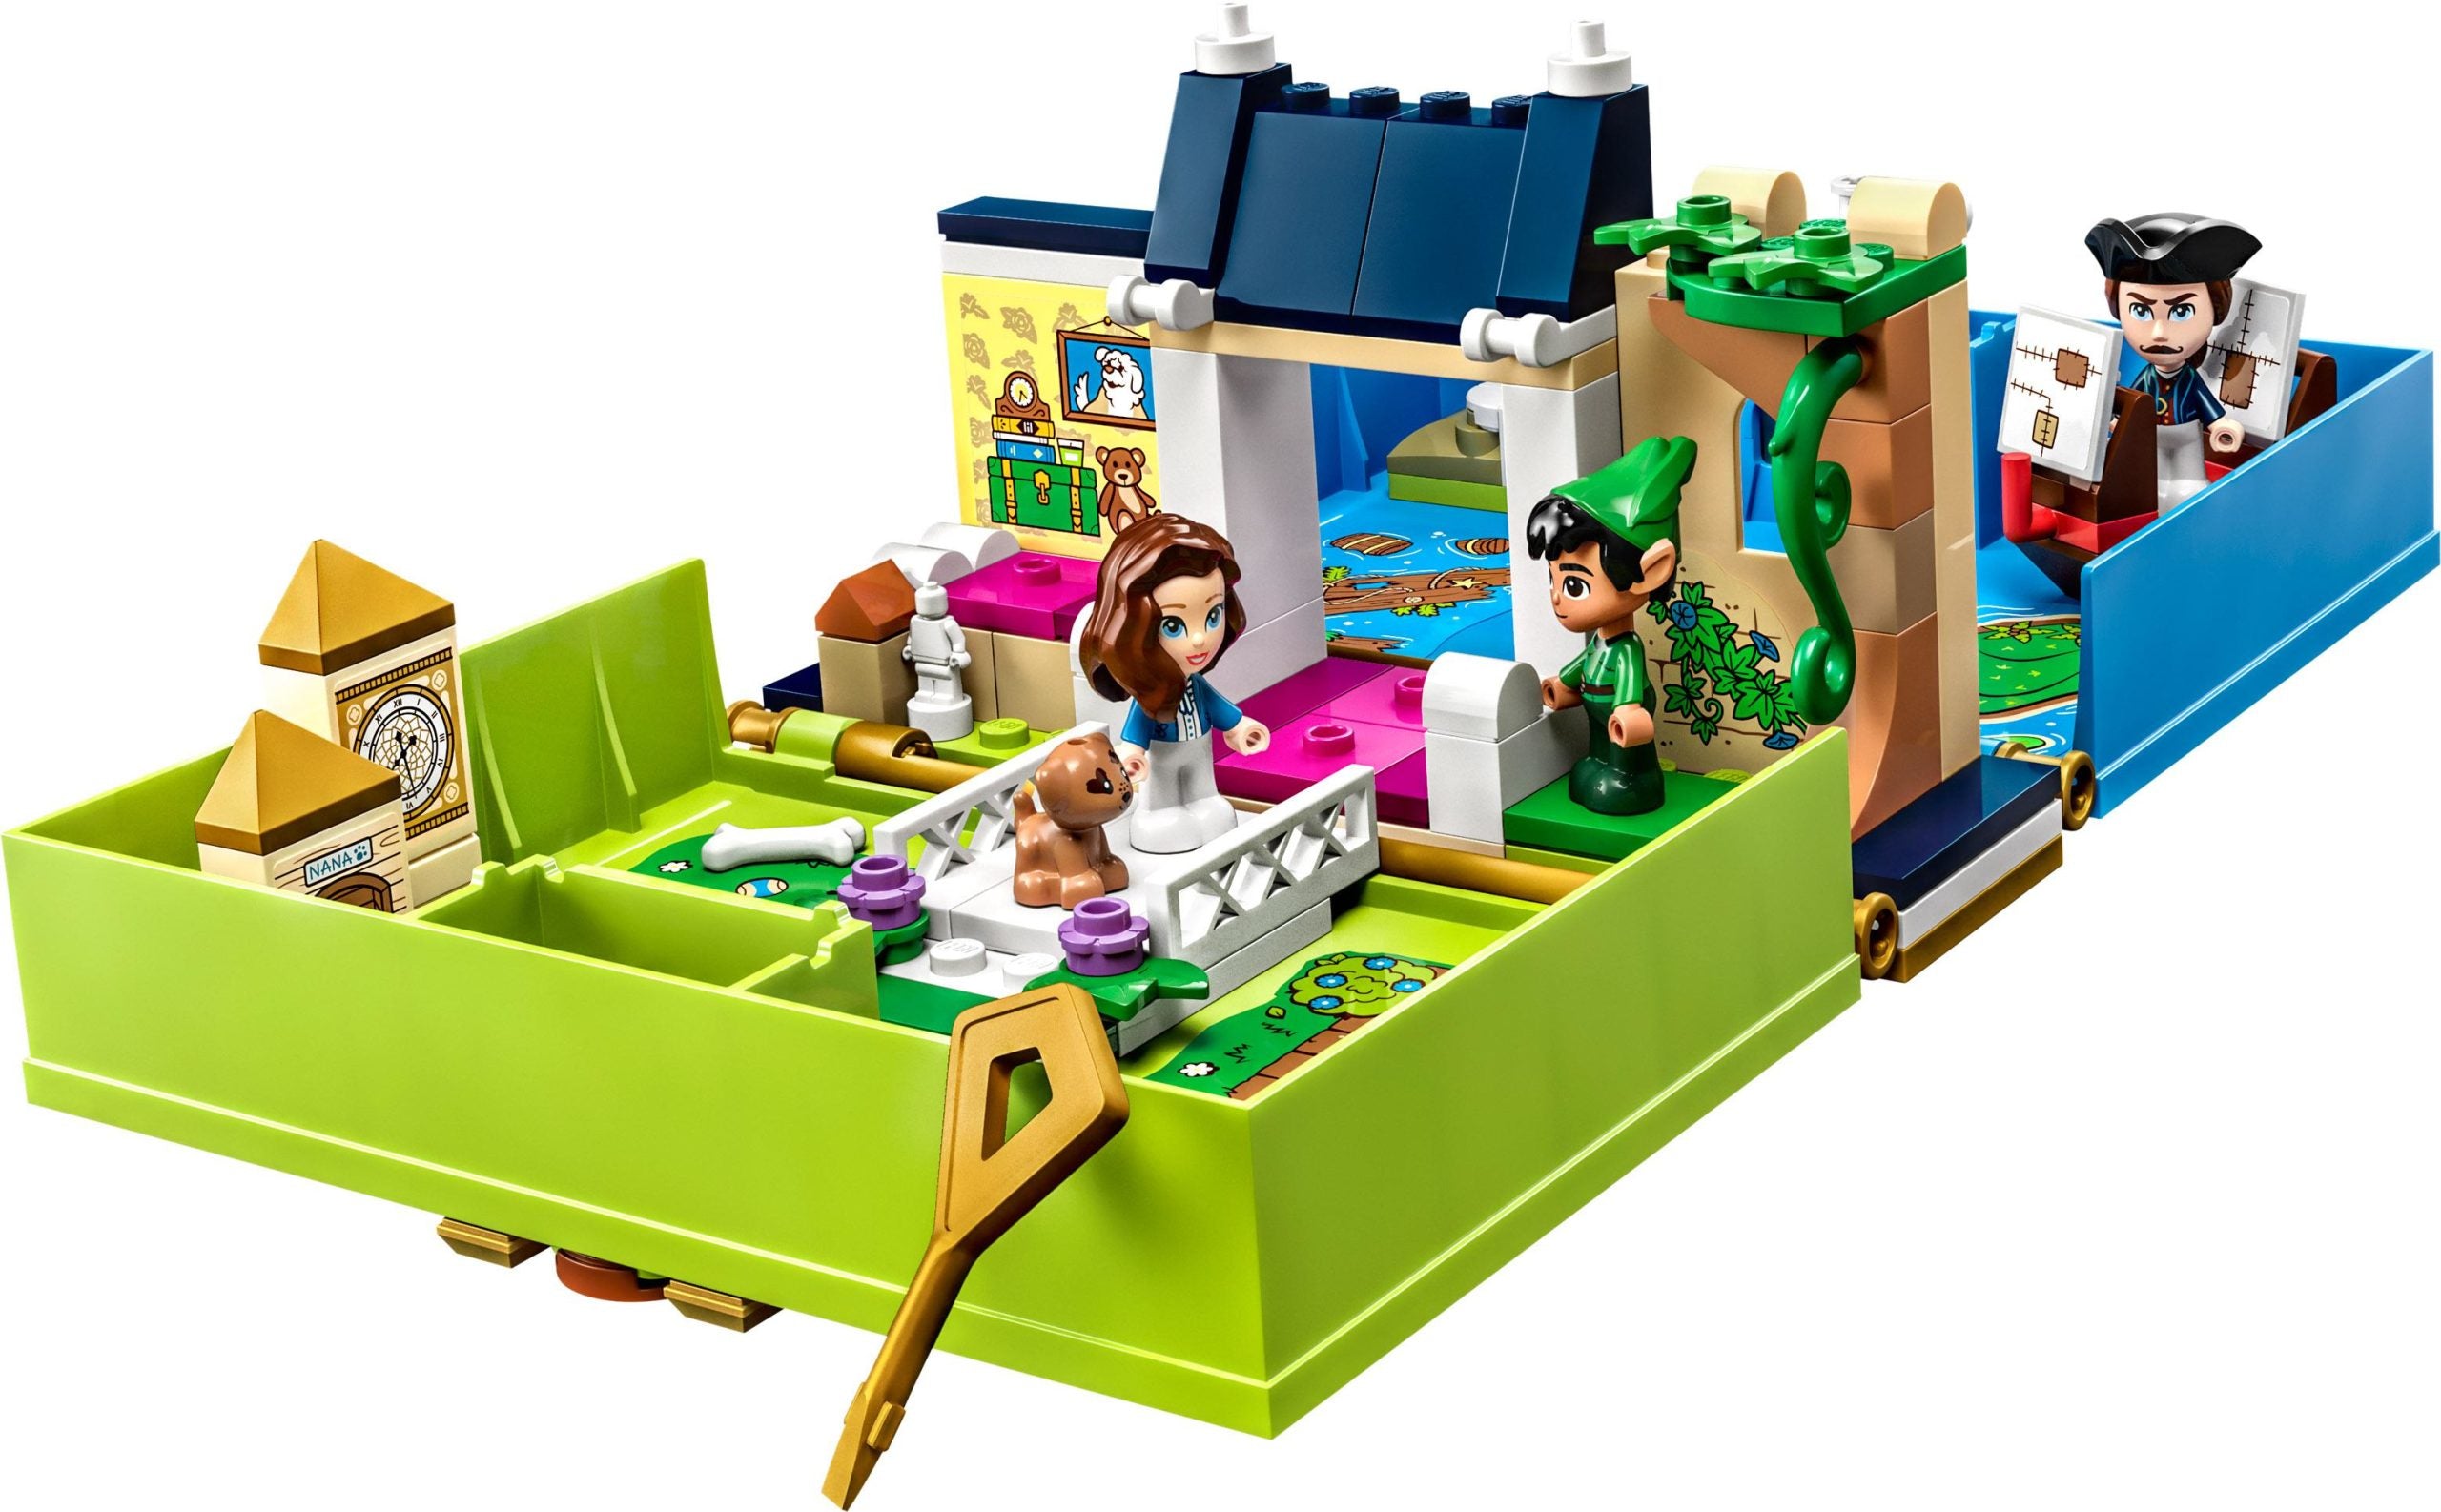 43220 - Lego - Disney Classic - Peter Pan &amp; Wendy